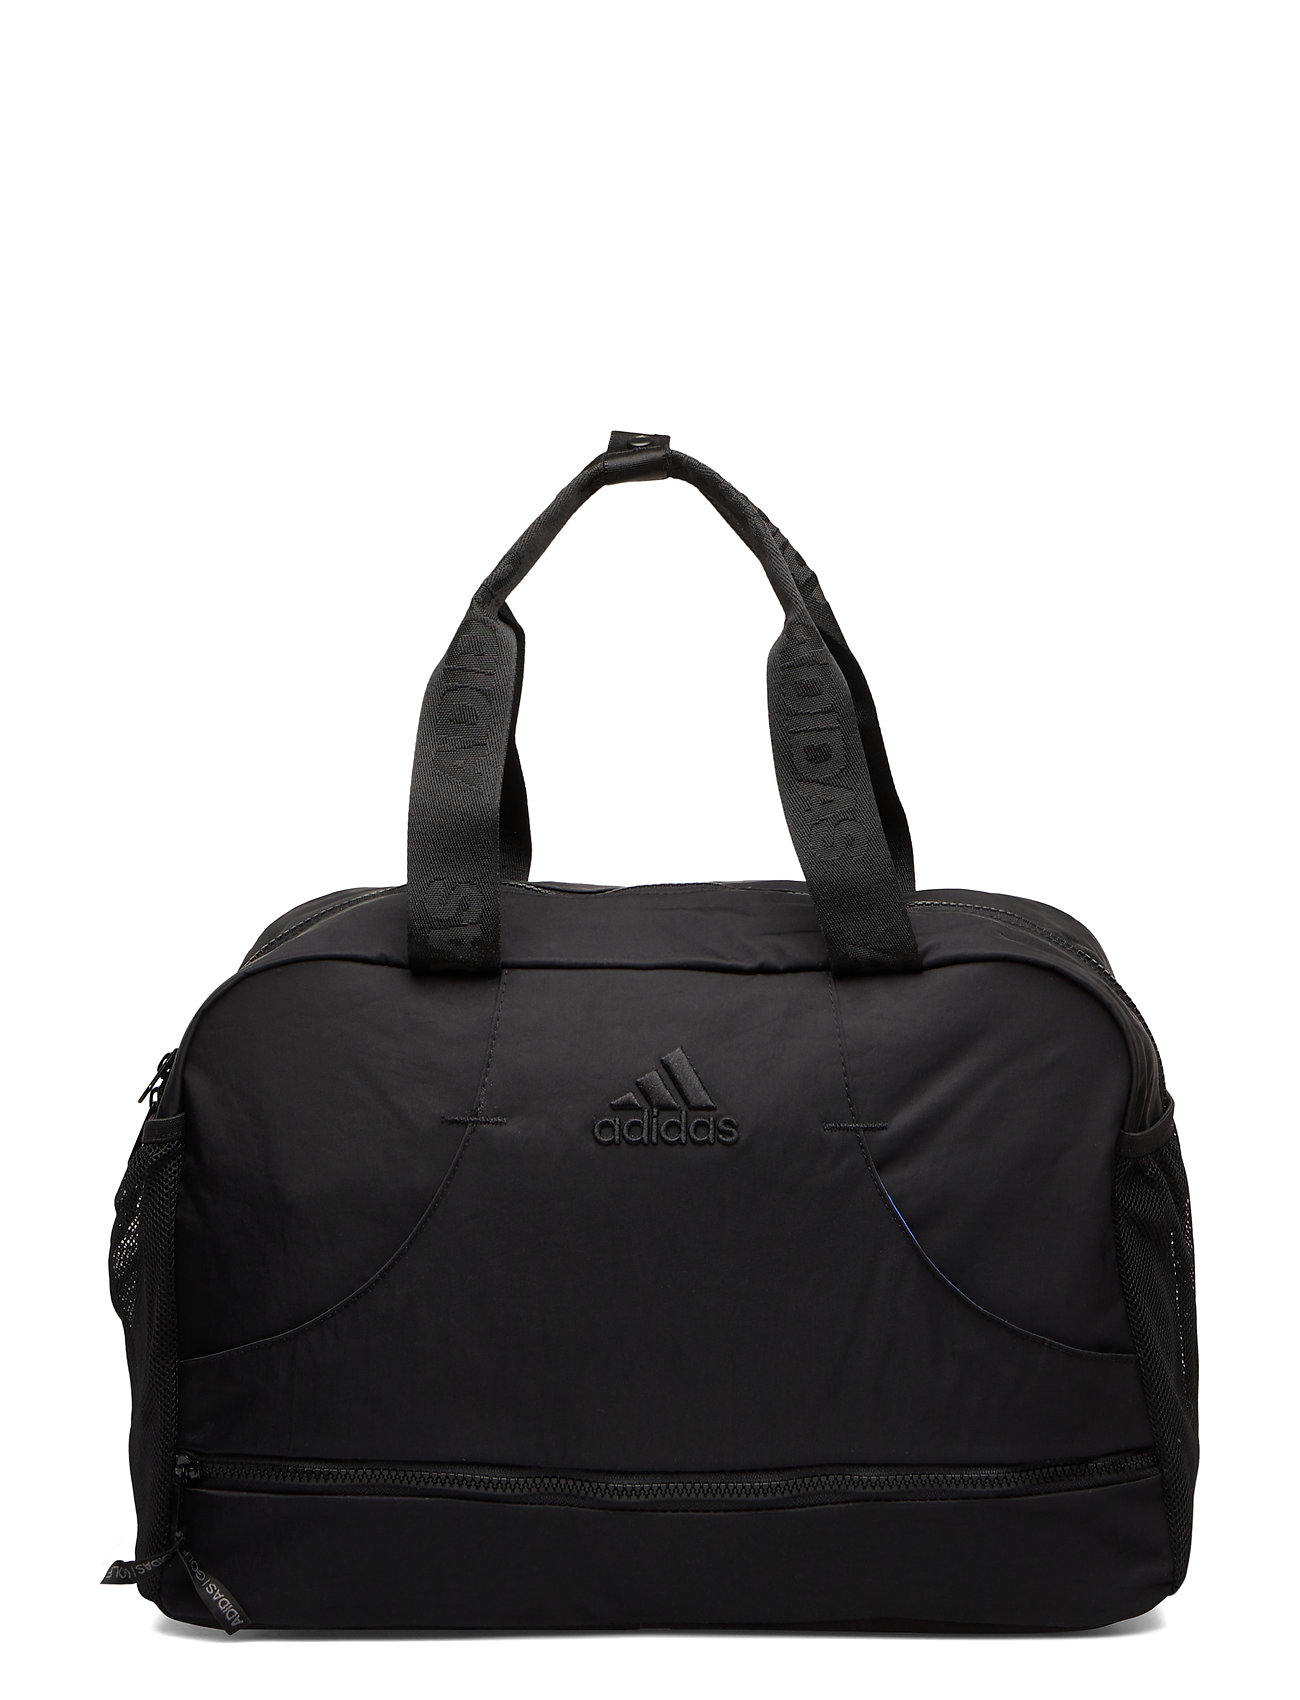 adidas Golf W Tote Bag (Black), (38.97 